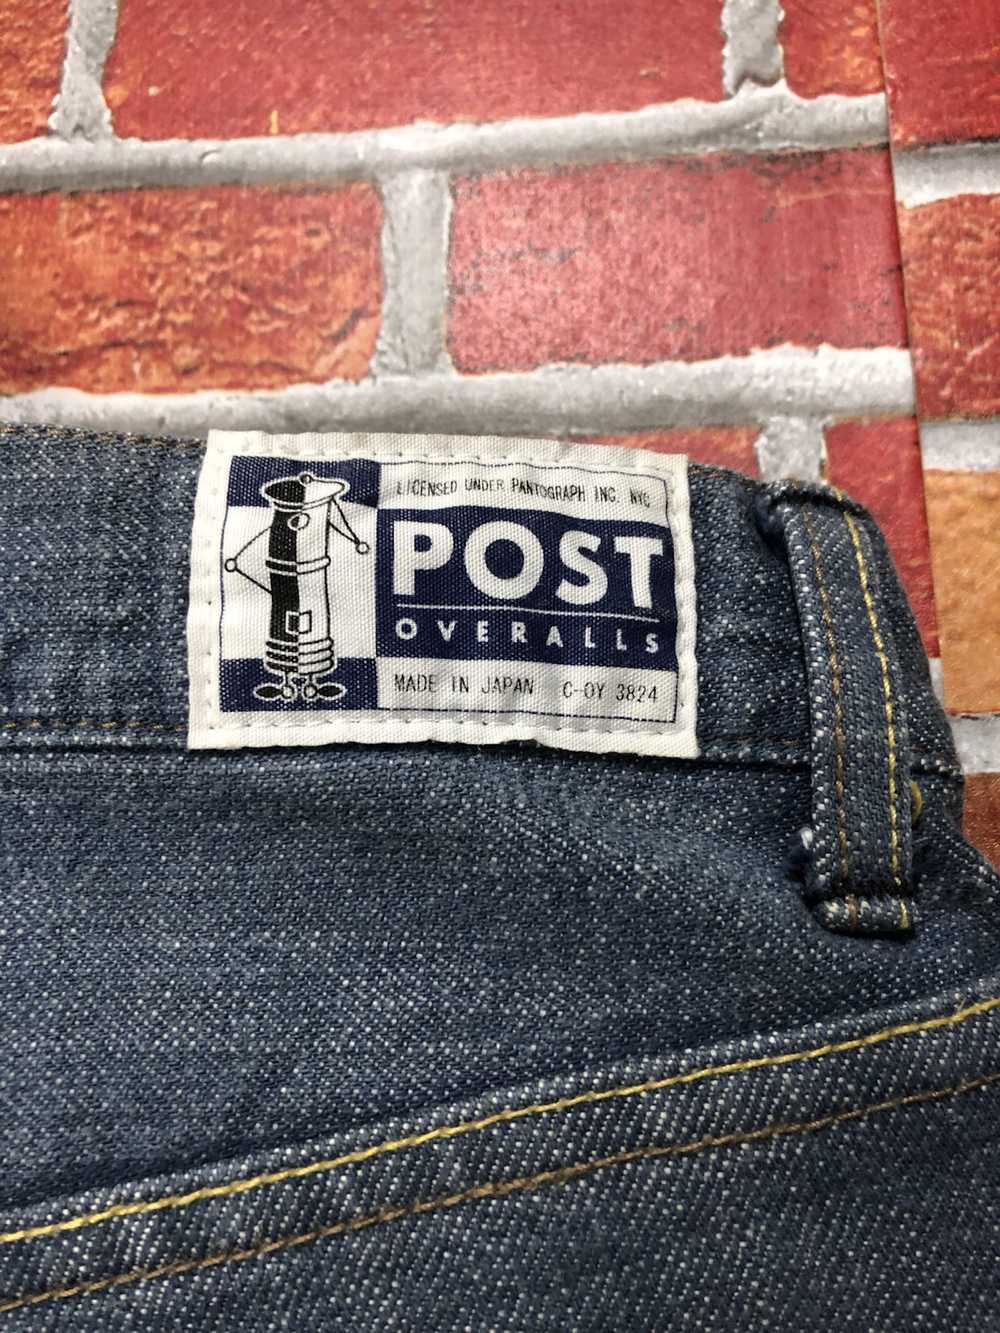 Post Overalls Post Overalls Pants - image 3